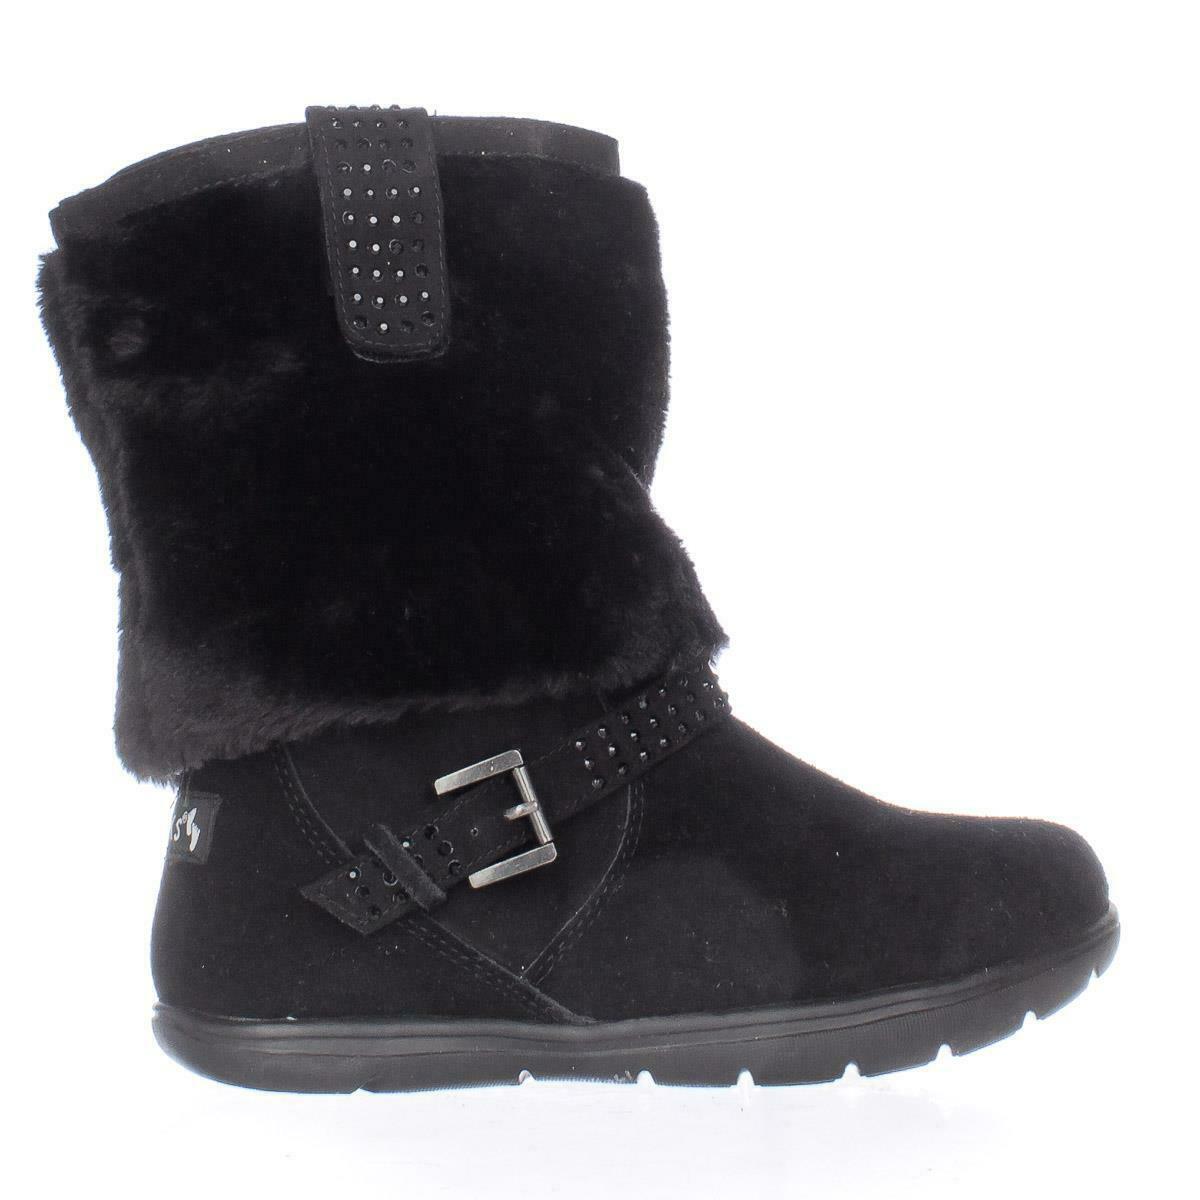 Cheeks Fit Body Interchangeable Knit/Faux Fur Winter Boots Black 6.5US ...